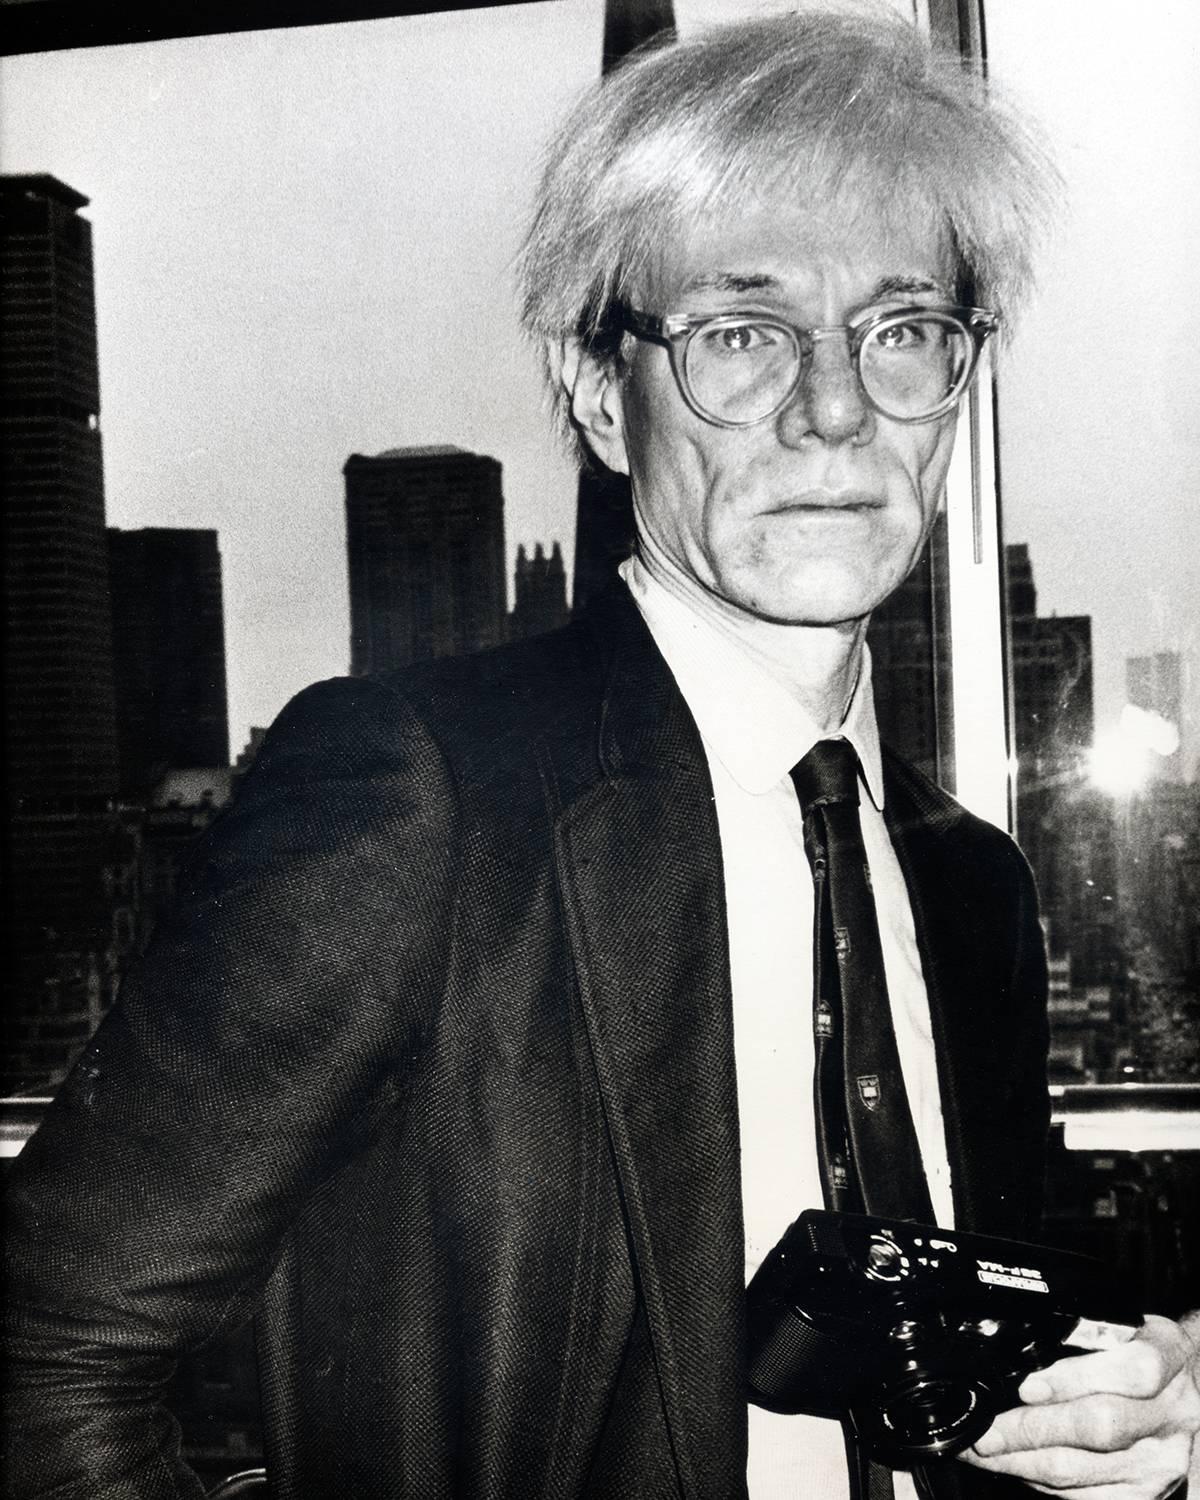 Fernando Natalici Portrait Photograph - Photograph of ANDY WARHOL New York 1978